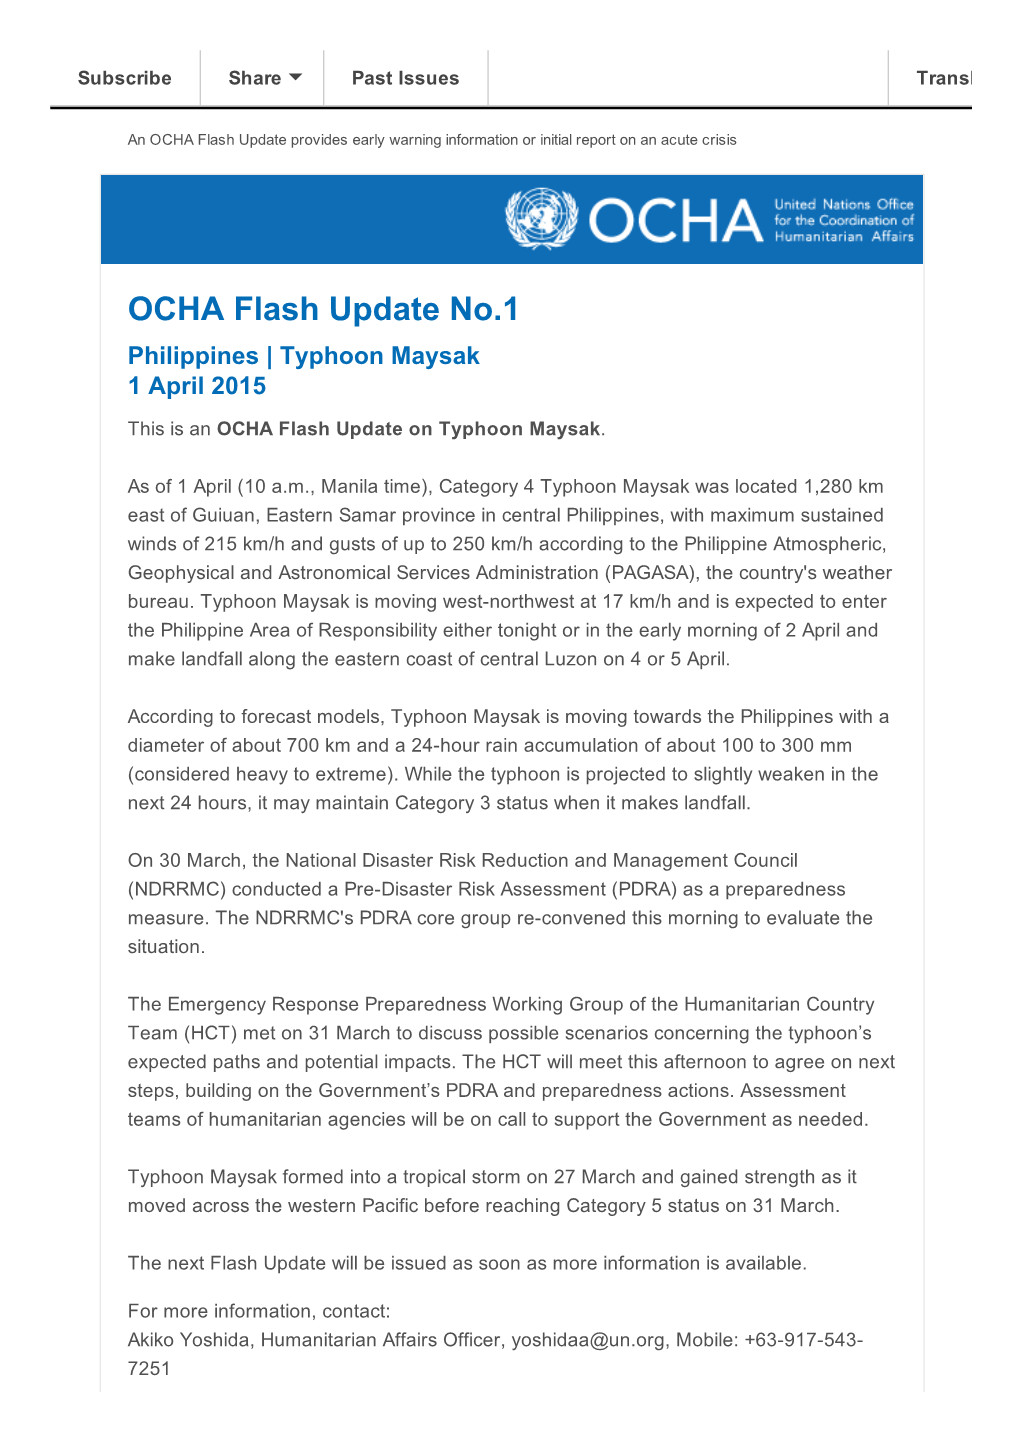 OCHA Philippines Flash Update No 1 on Typhoon Maysak (1 April 2015)